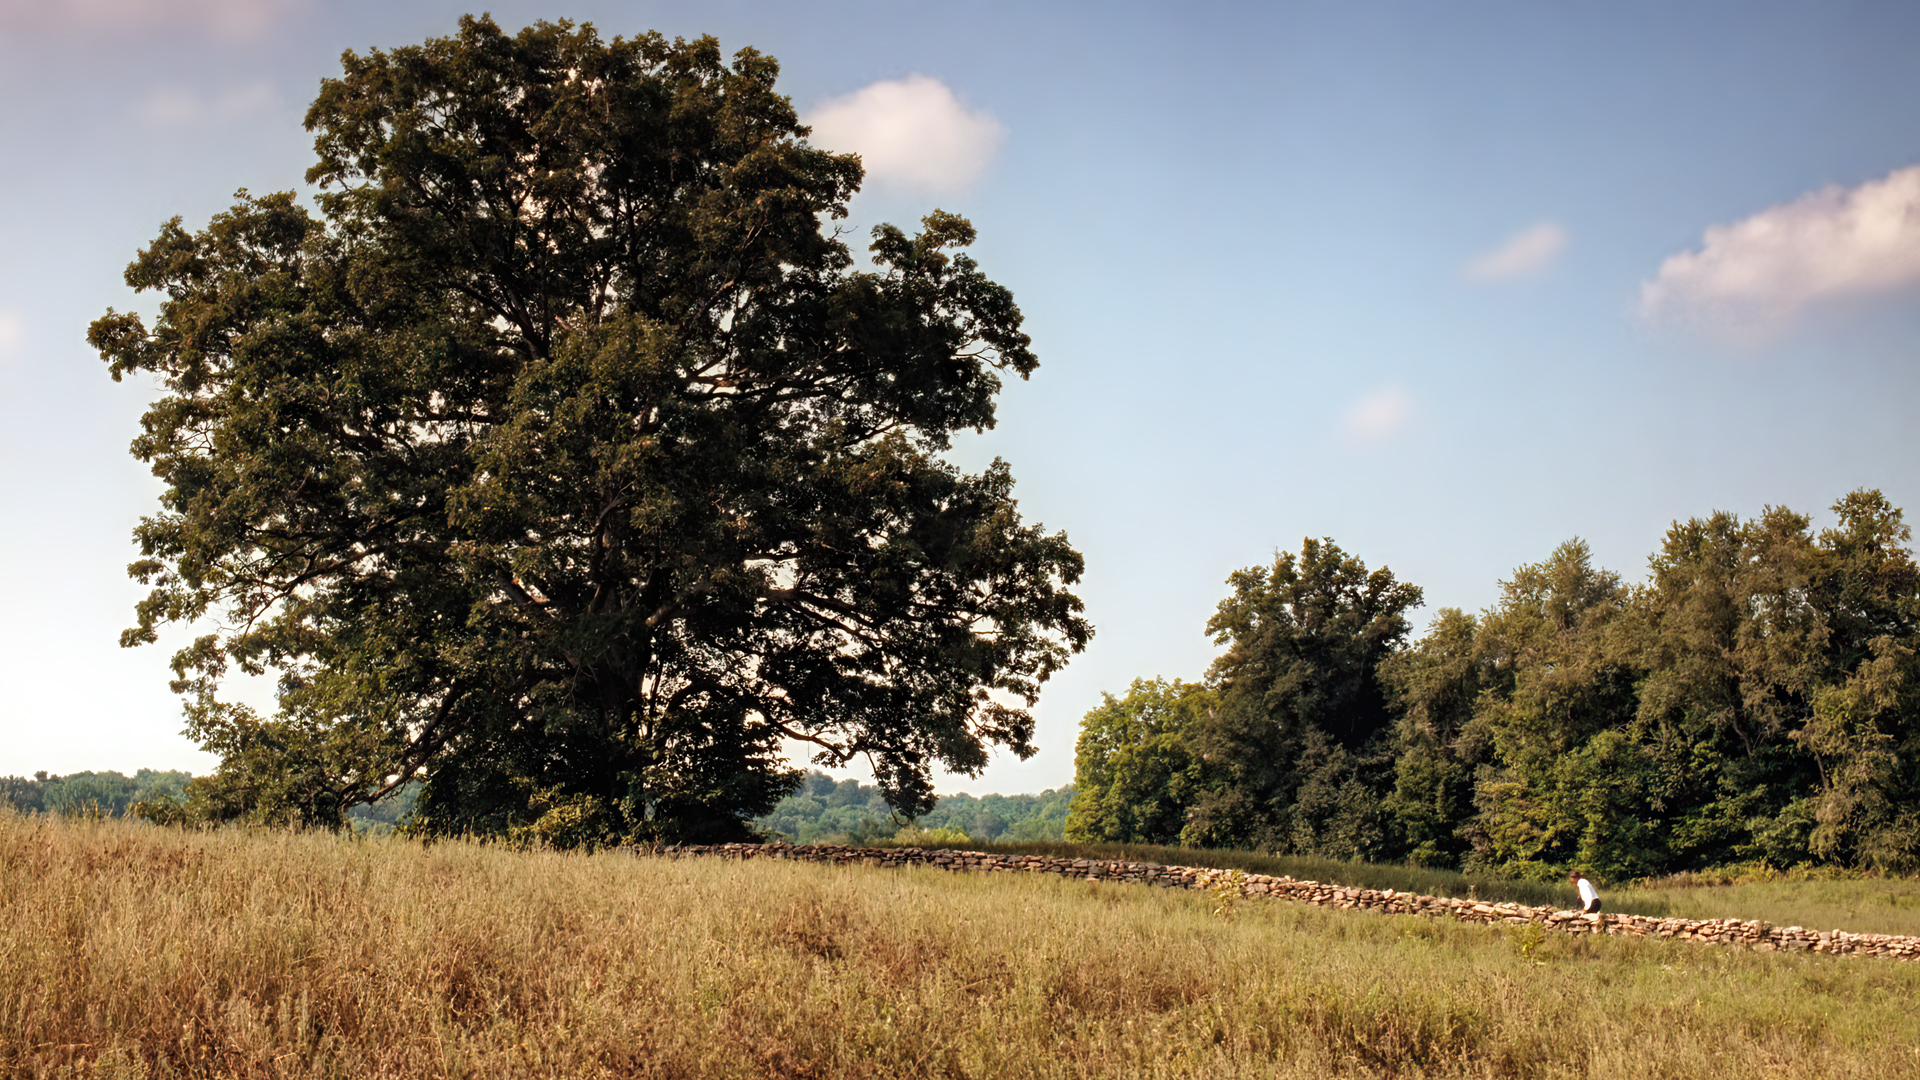 The Shawshank Redemption Movies Film Stills Sky Field Rural Morgan Freeman Stone Fence Trees Clouds  1920x1080